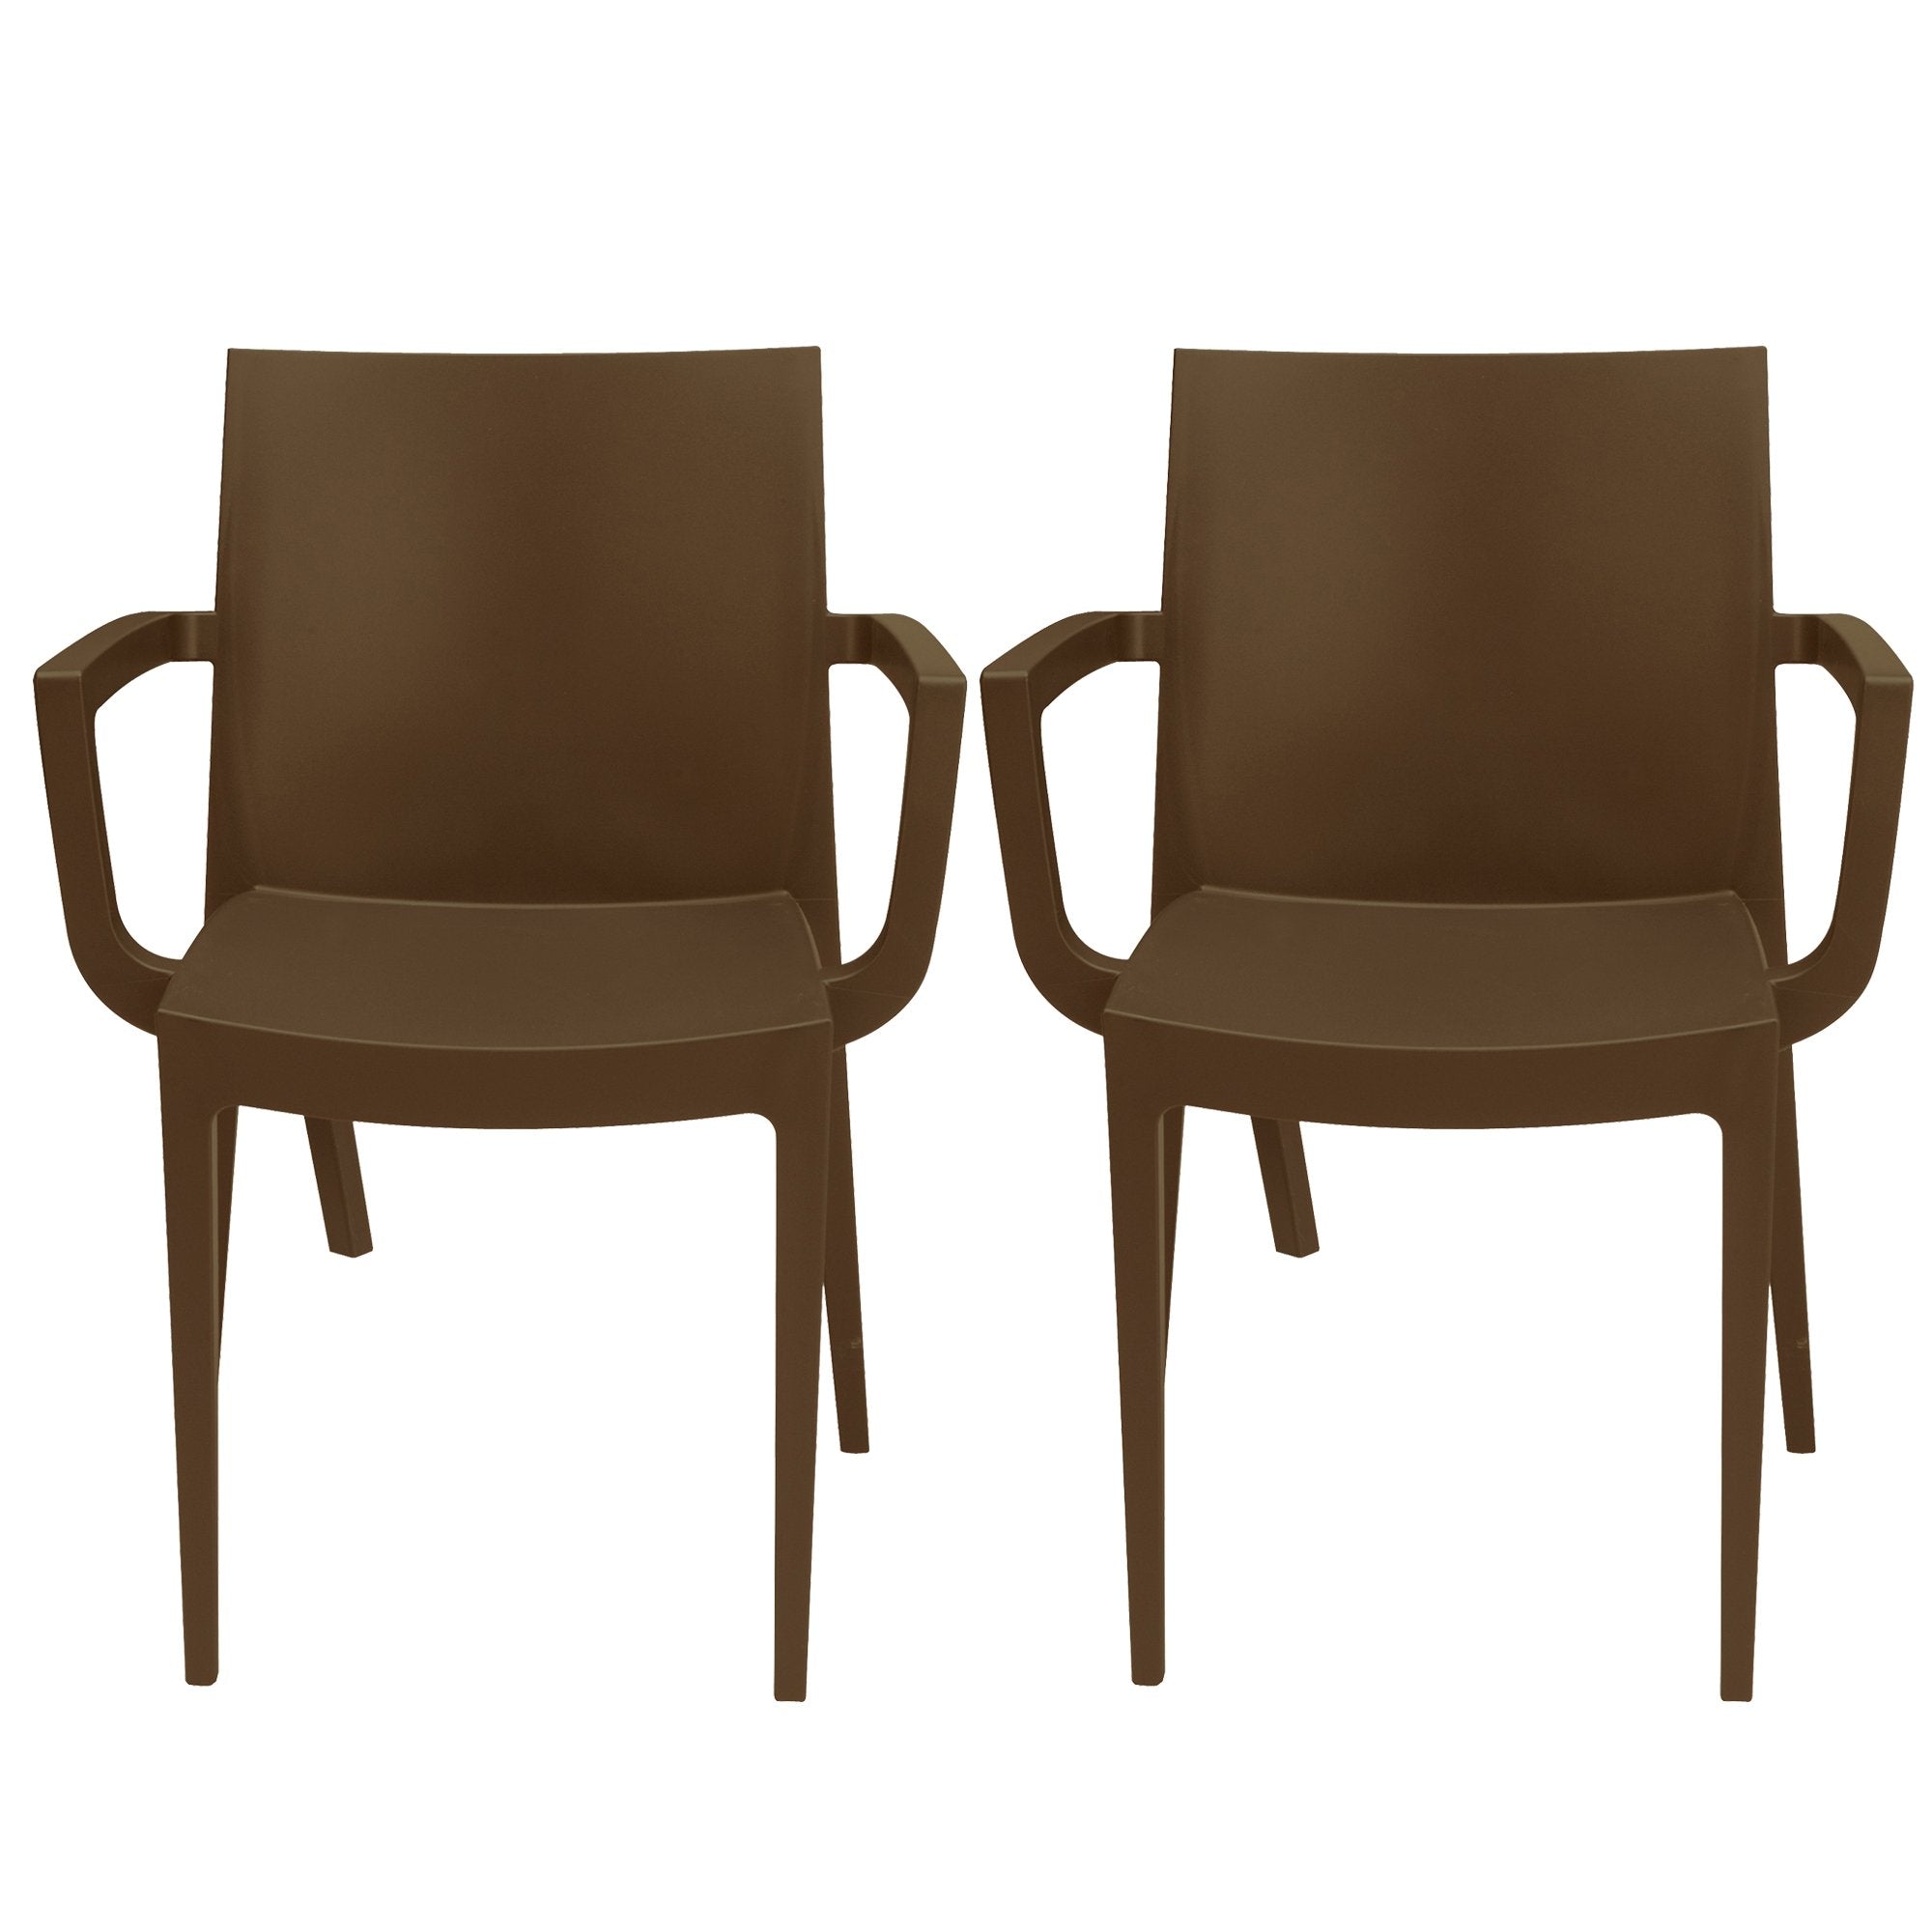 grandsoleil-set-2-sedie-braccioli-venice-polipropilene-moka